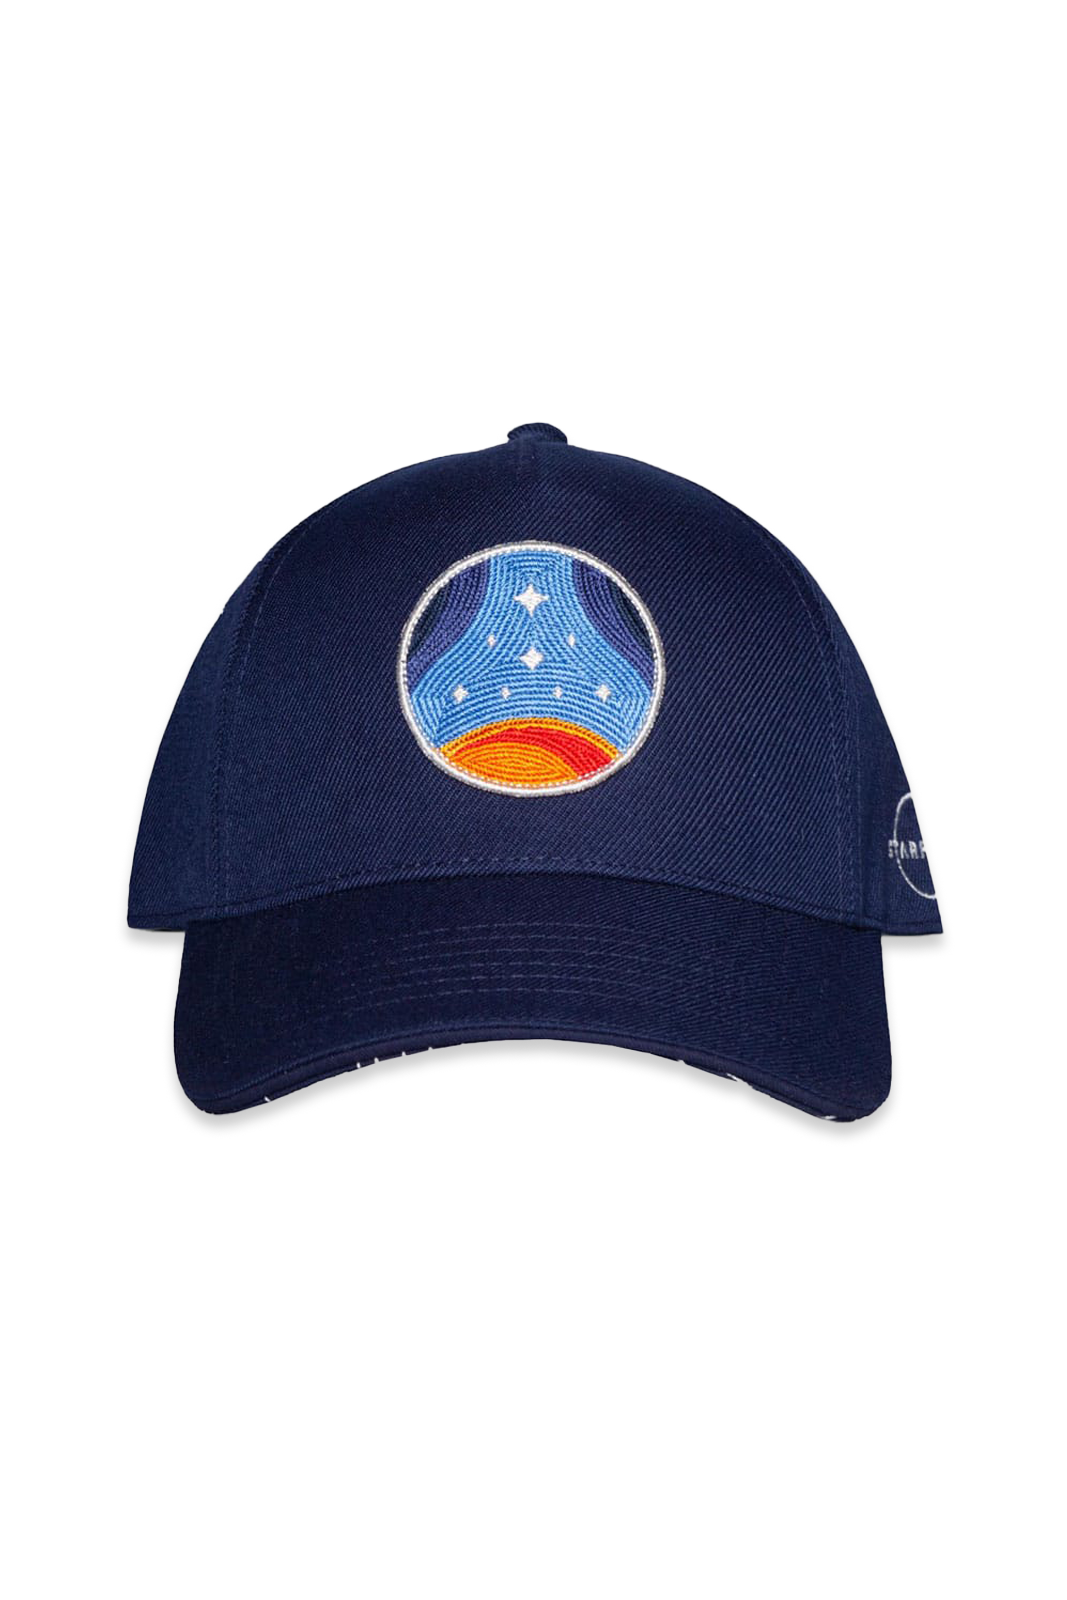 Baseball Cap - Starfield - Shipudden Constellation